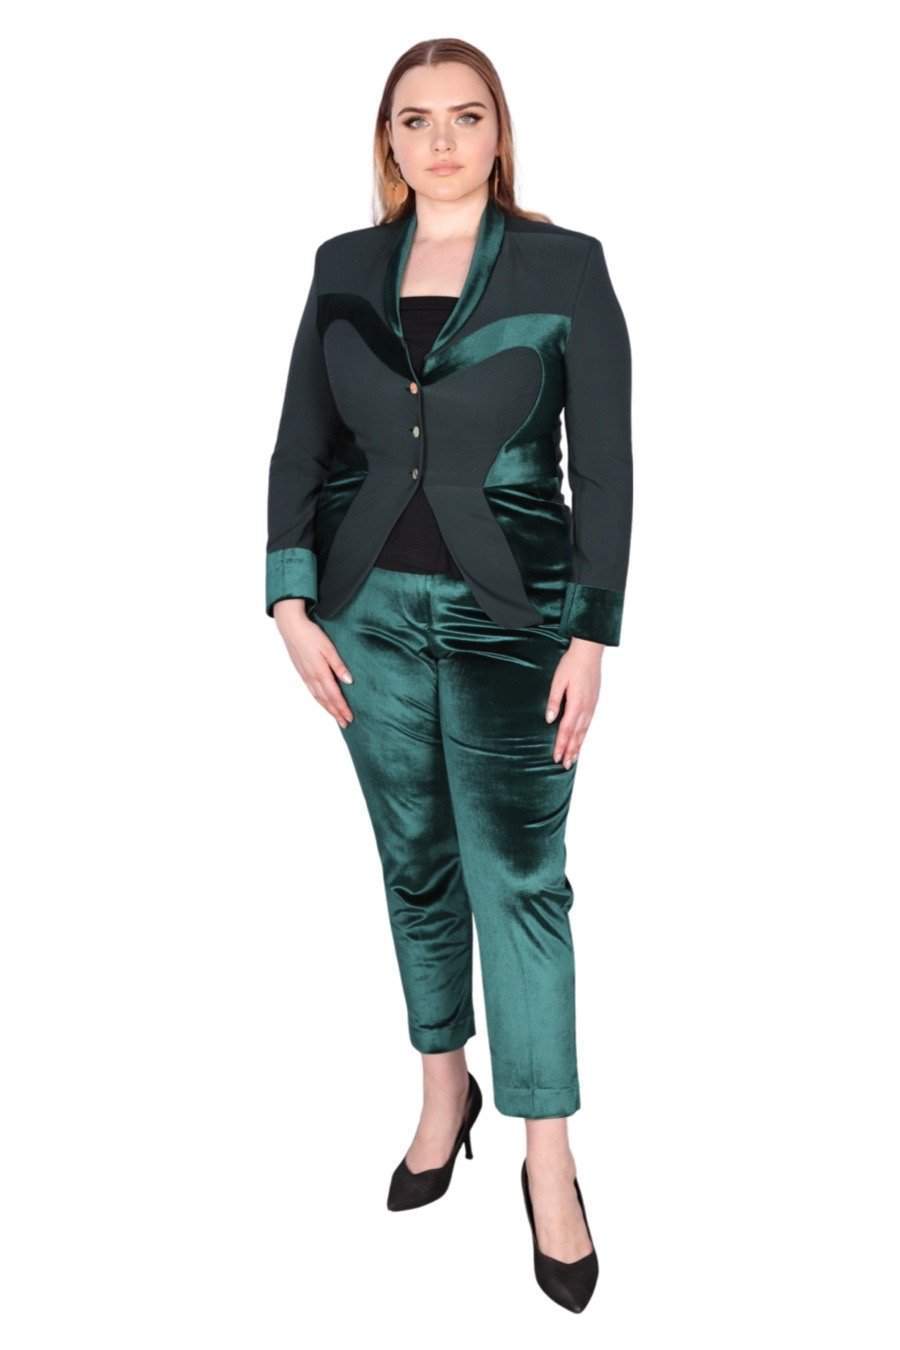 Ladies Business Green Velvet Suits-danddclothing-AFRICAN WEAR FOR WOMEN,Green,Ladies Suits,Sale